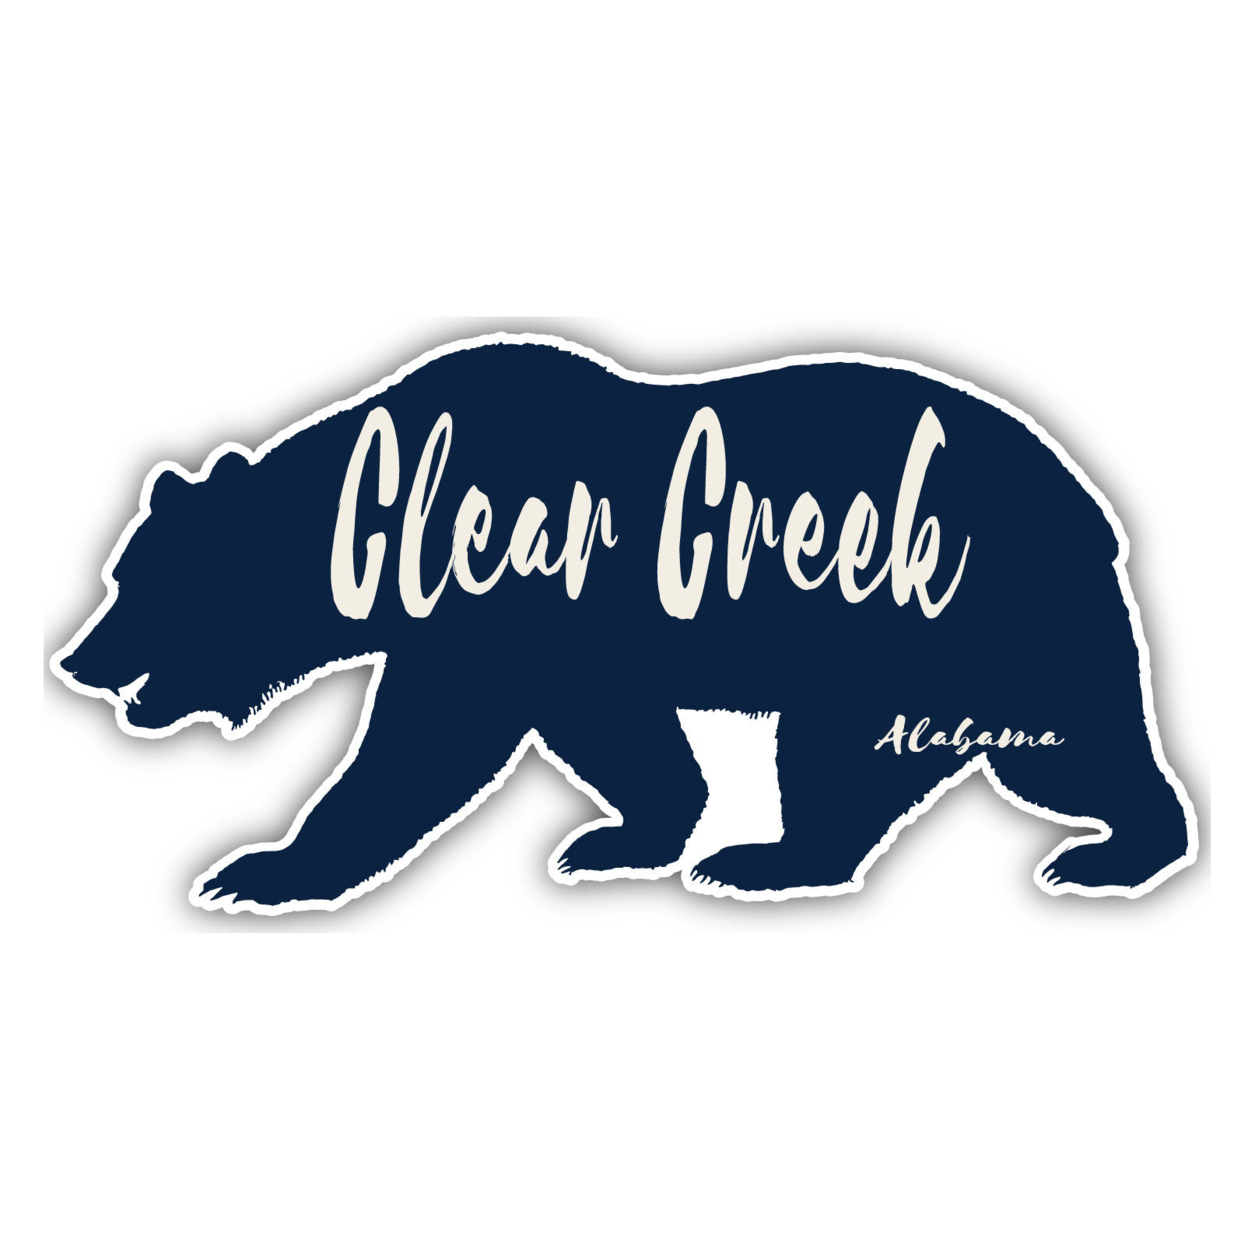 Clear Creek Alabama Souvenir Decorative Stickers (Choose Theme And Size) - Single Unit, 8-Inch, Adventures Awaits